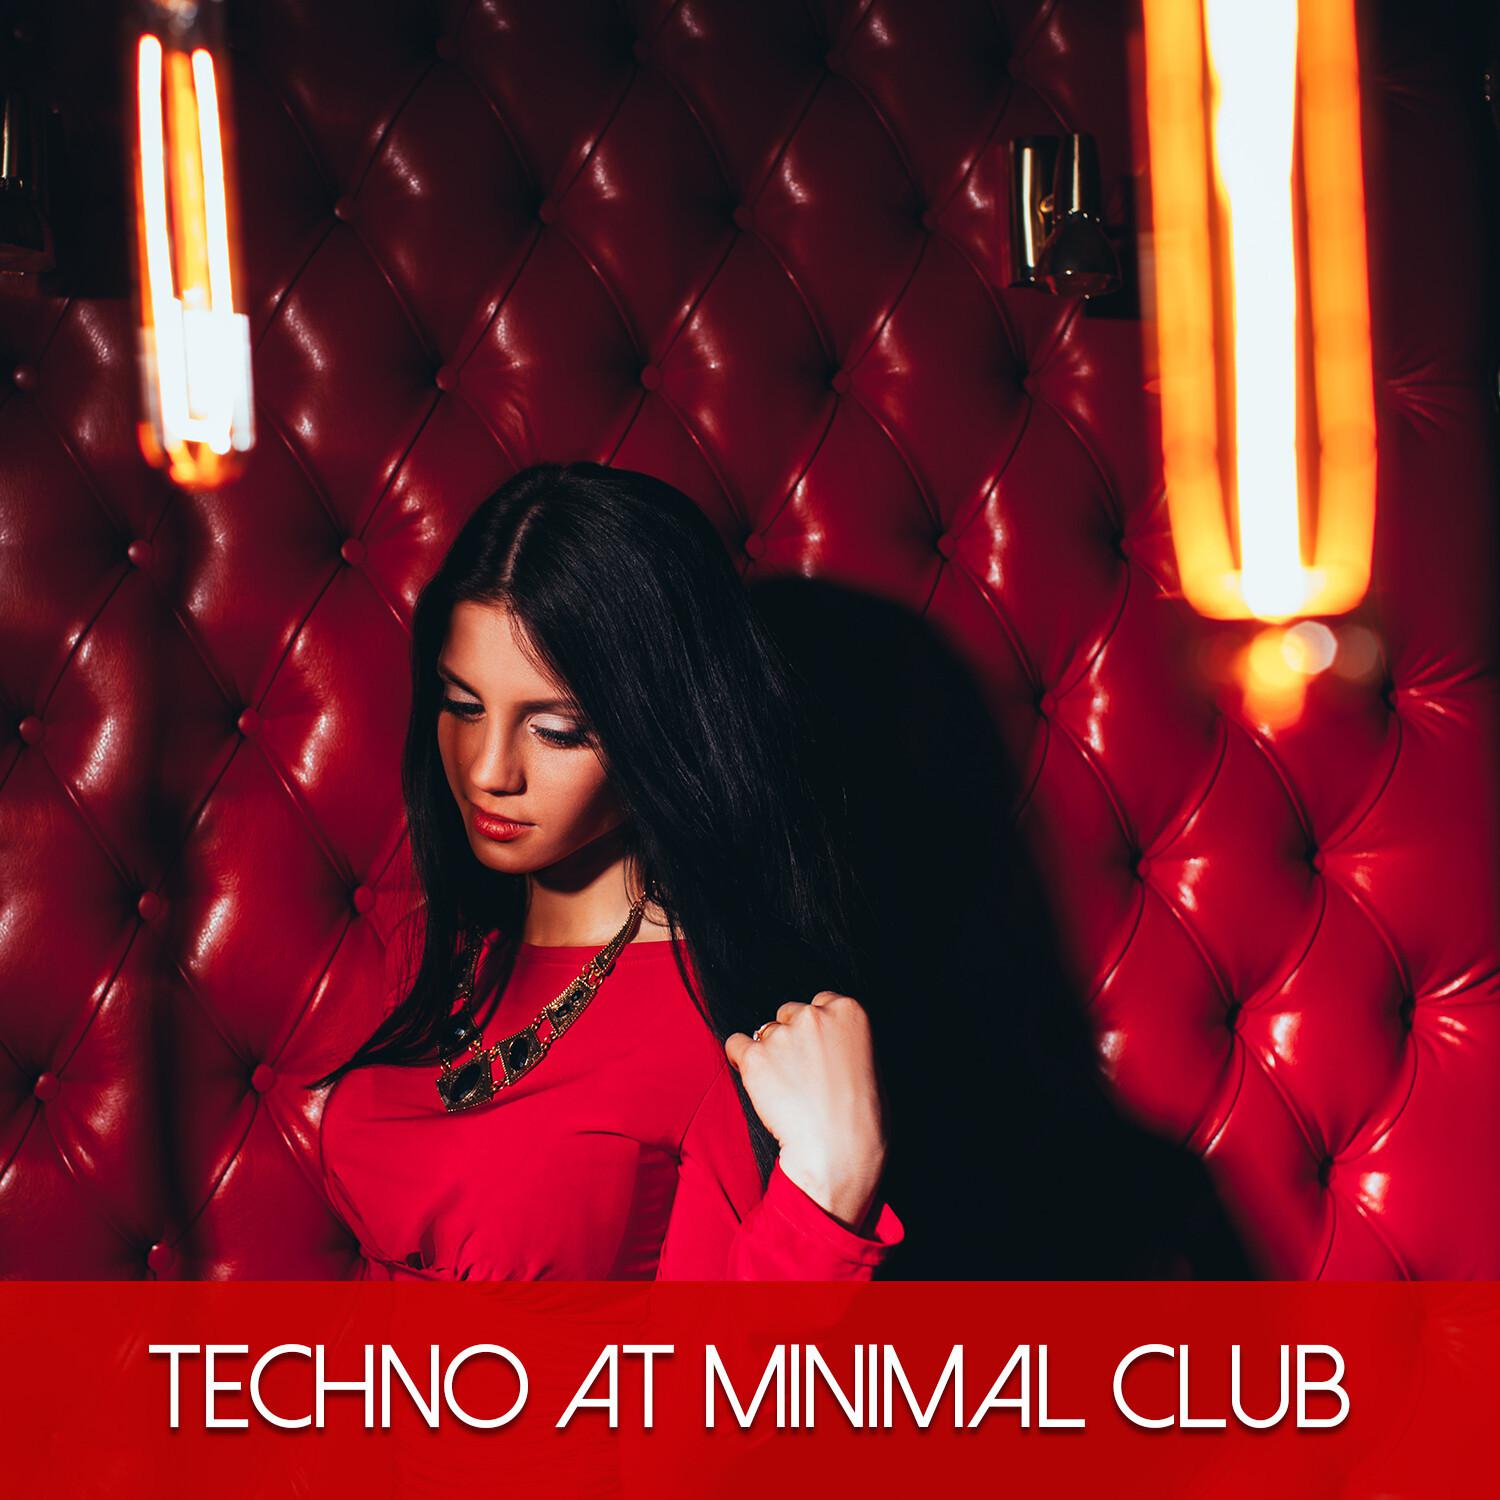 Techno at Minimal Club